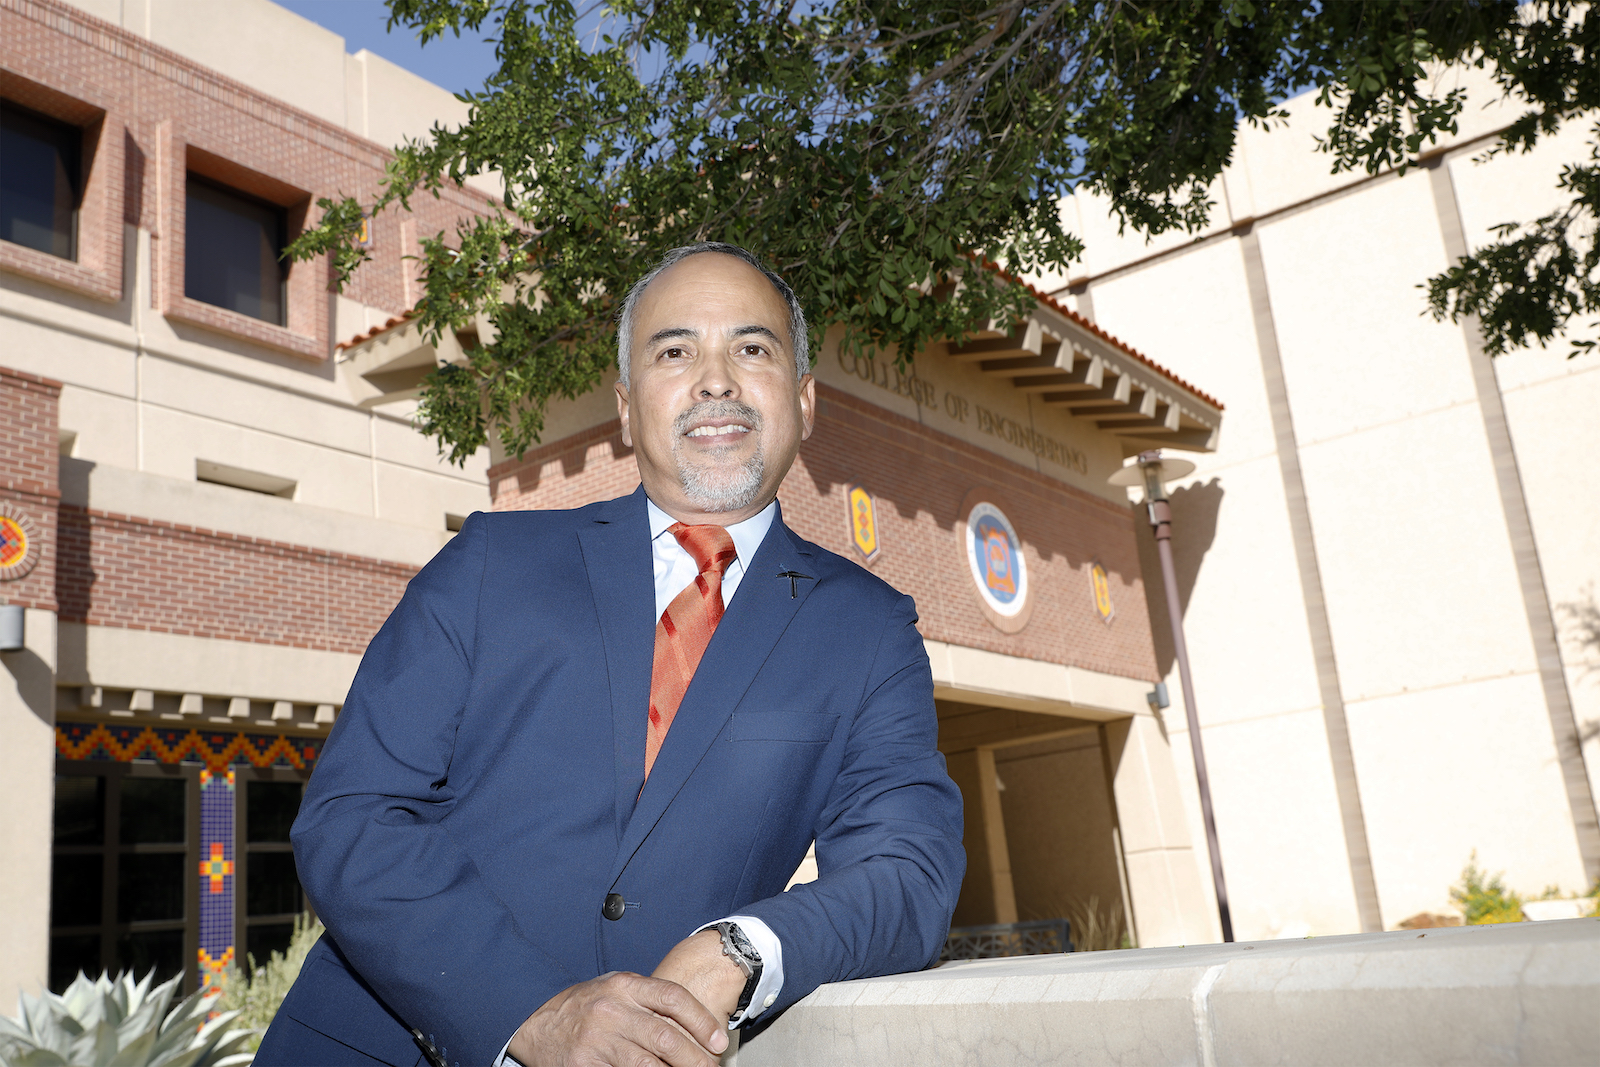 Bernardino Olague began his term as President of the UTEP Alumni Association on Sept. 1, 2021, replacing outgoing president, Martha Isabel Aguayo. 